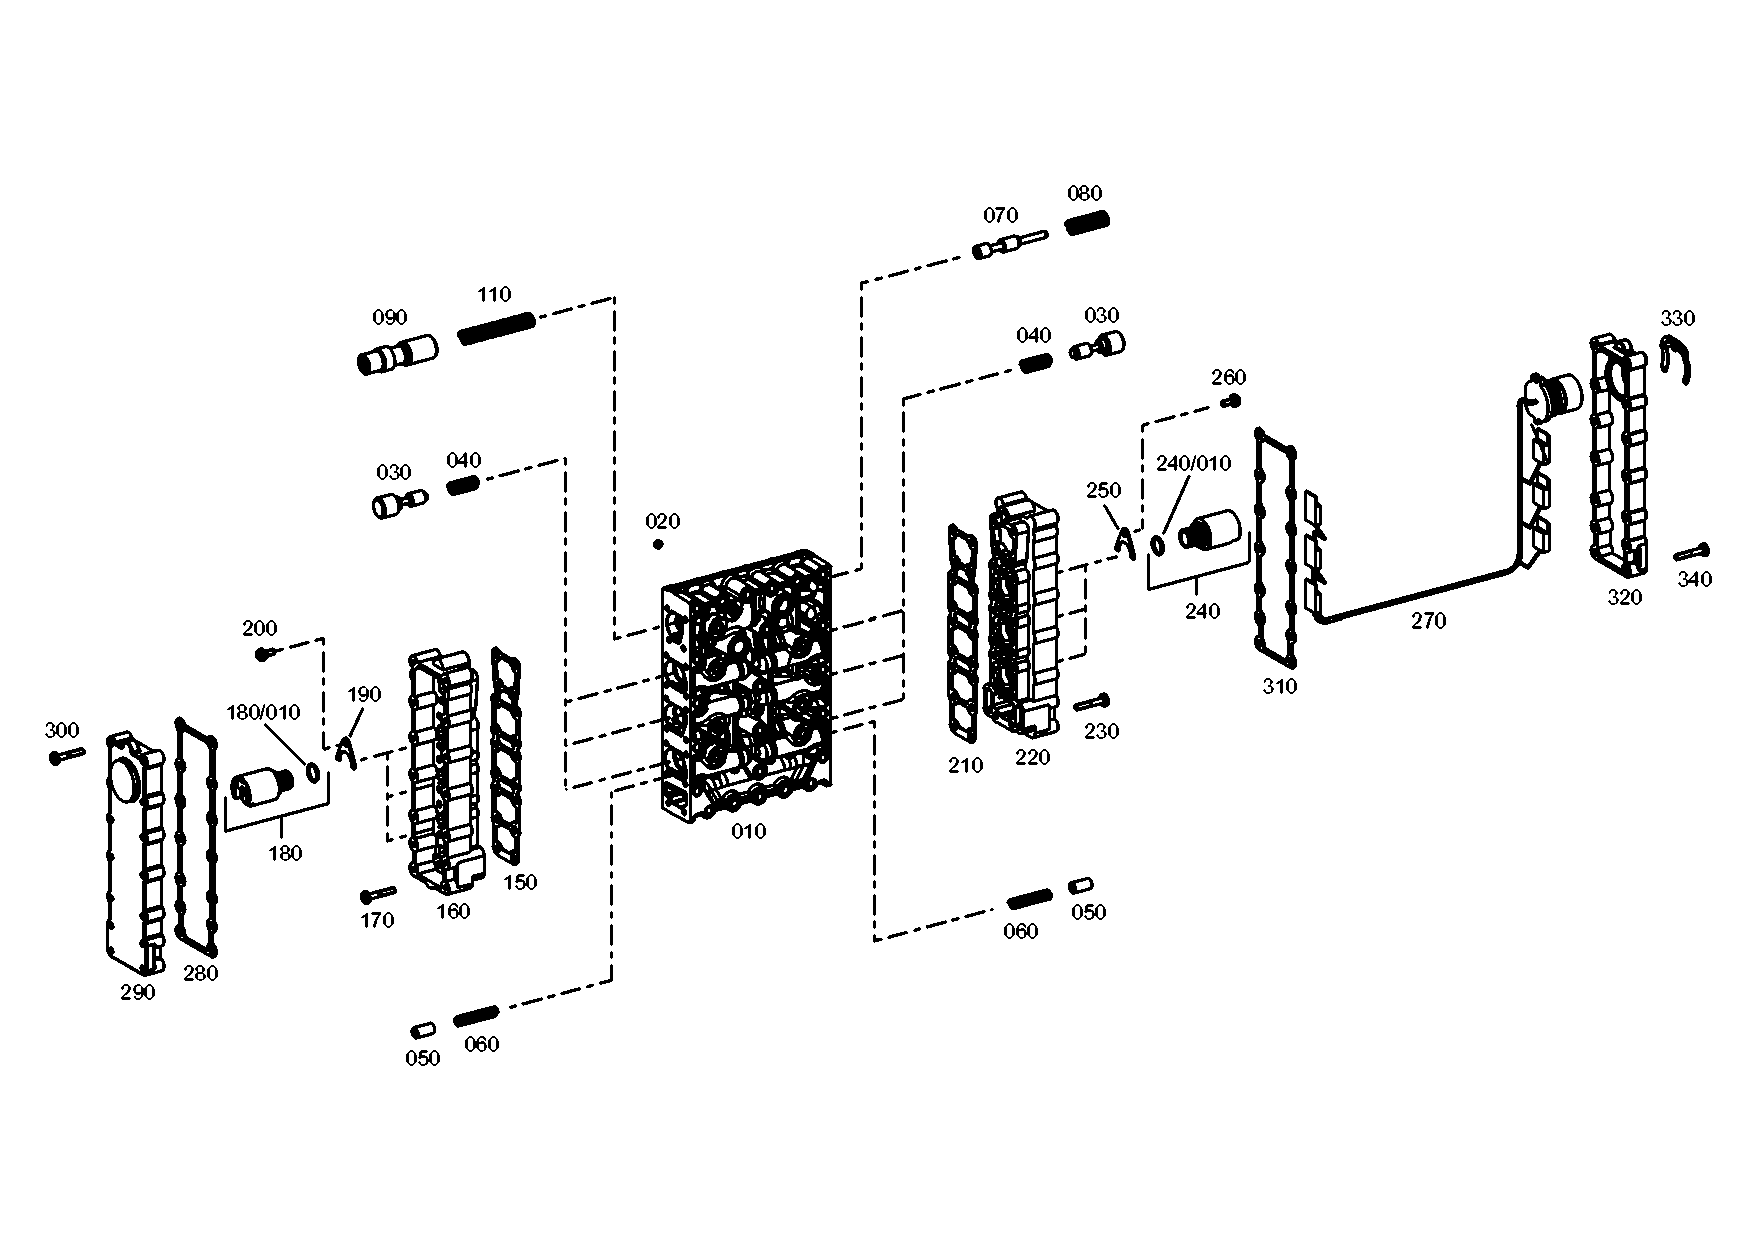 drawing for SCHOPF MASCHINENBAU GMBH 89413 - SHIFT SYSTEM (figure 5)